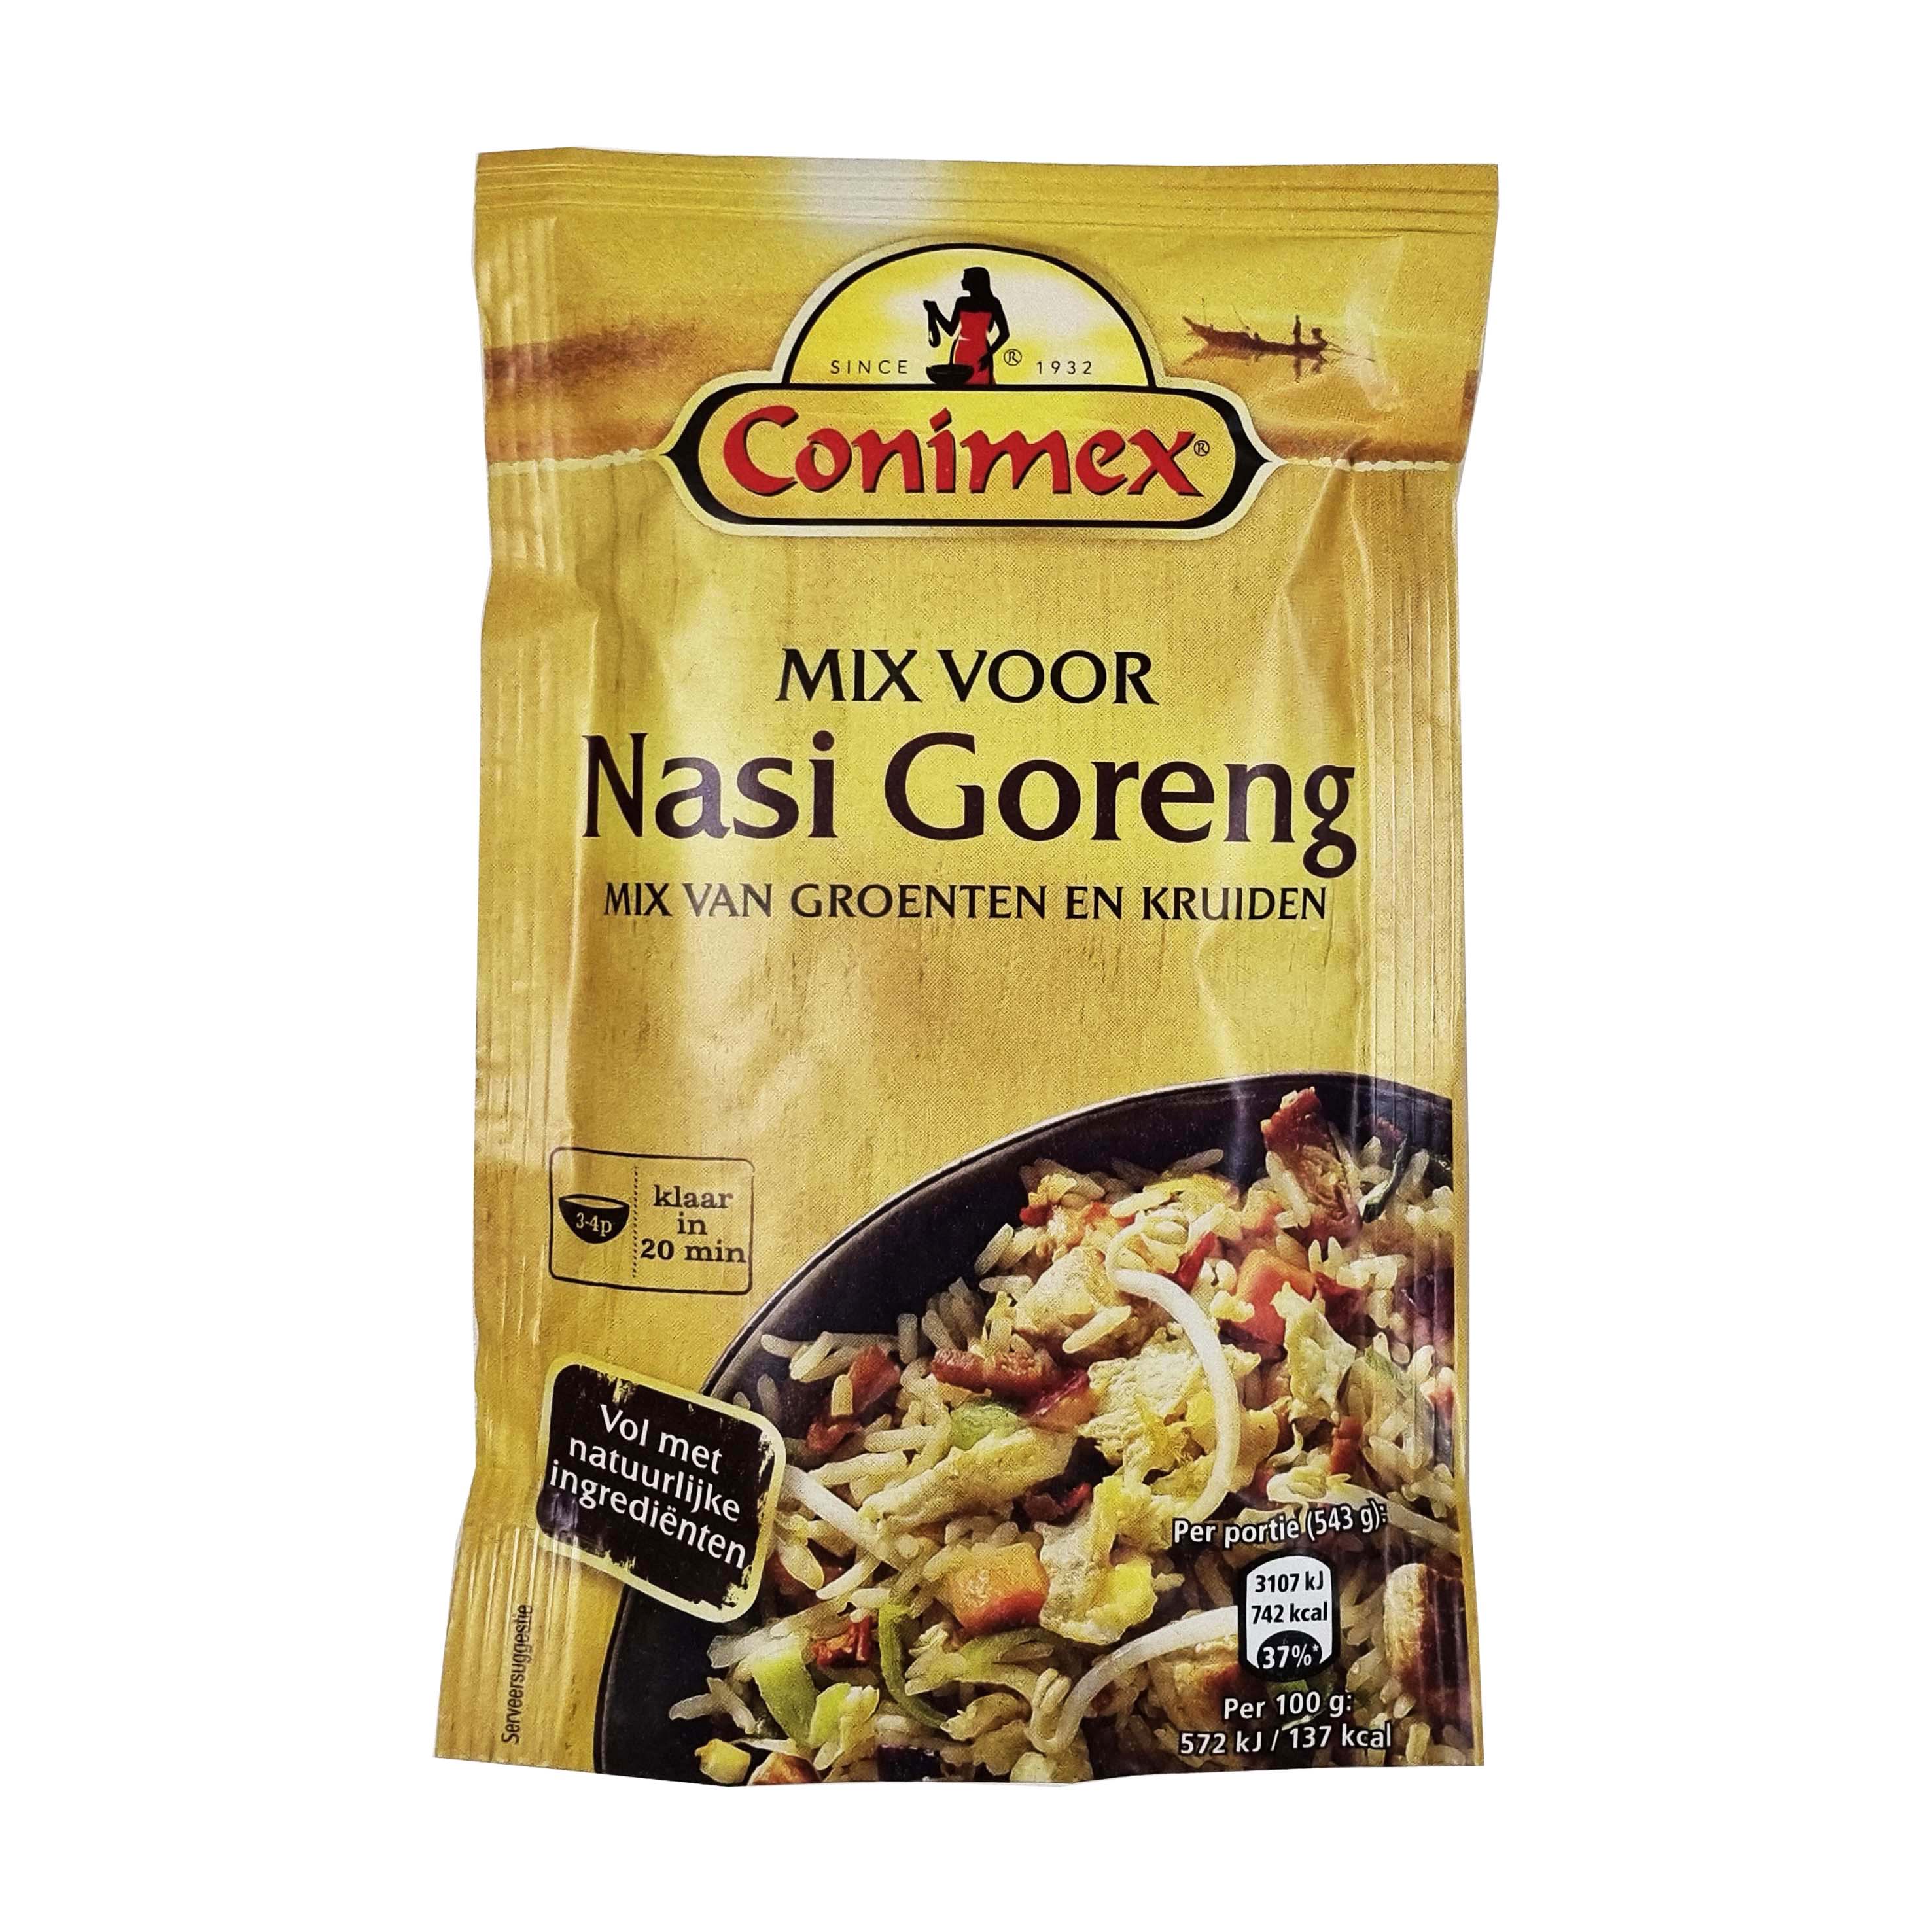 Conimex nasi goreng mezcla